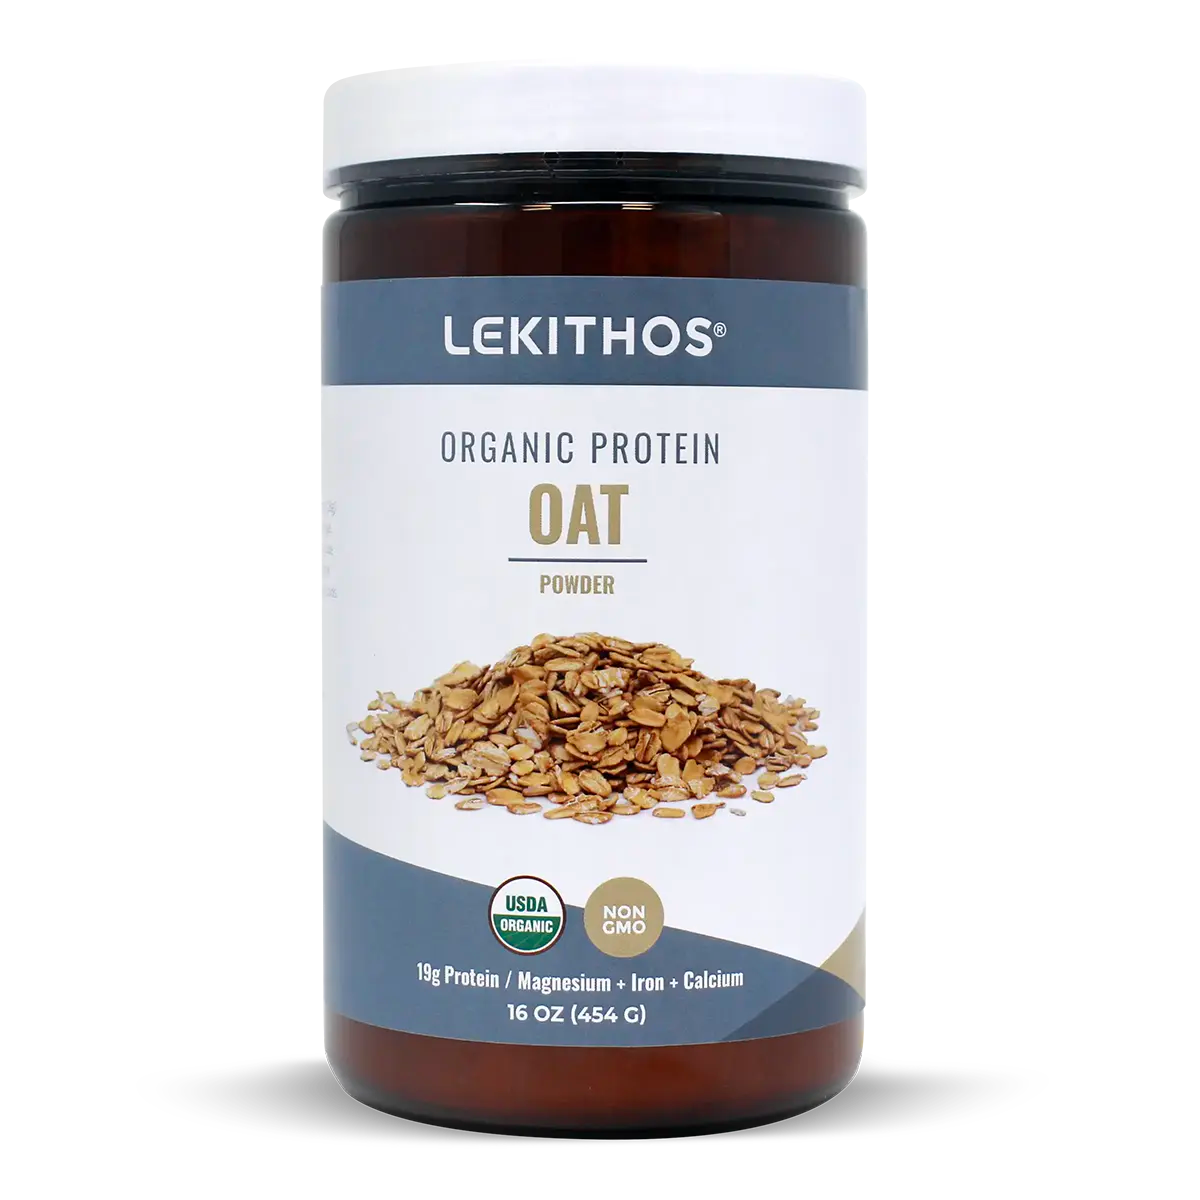 Organic Oat Protein